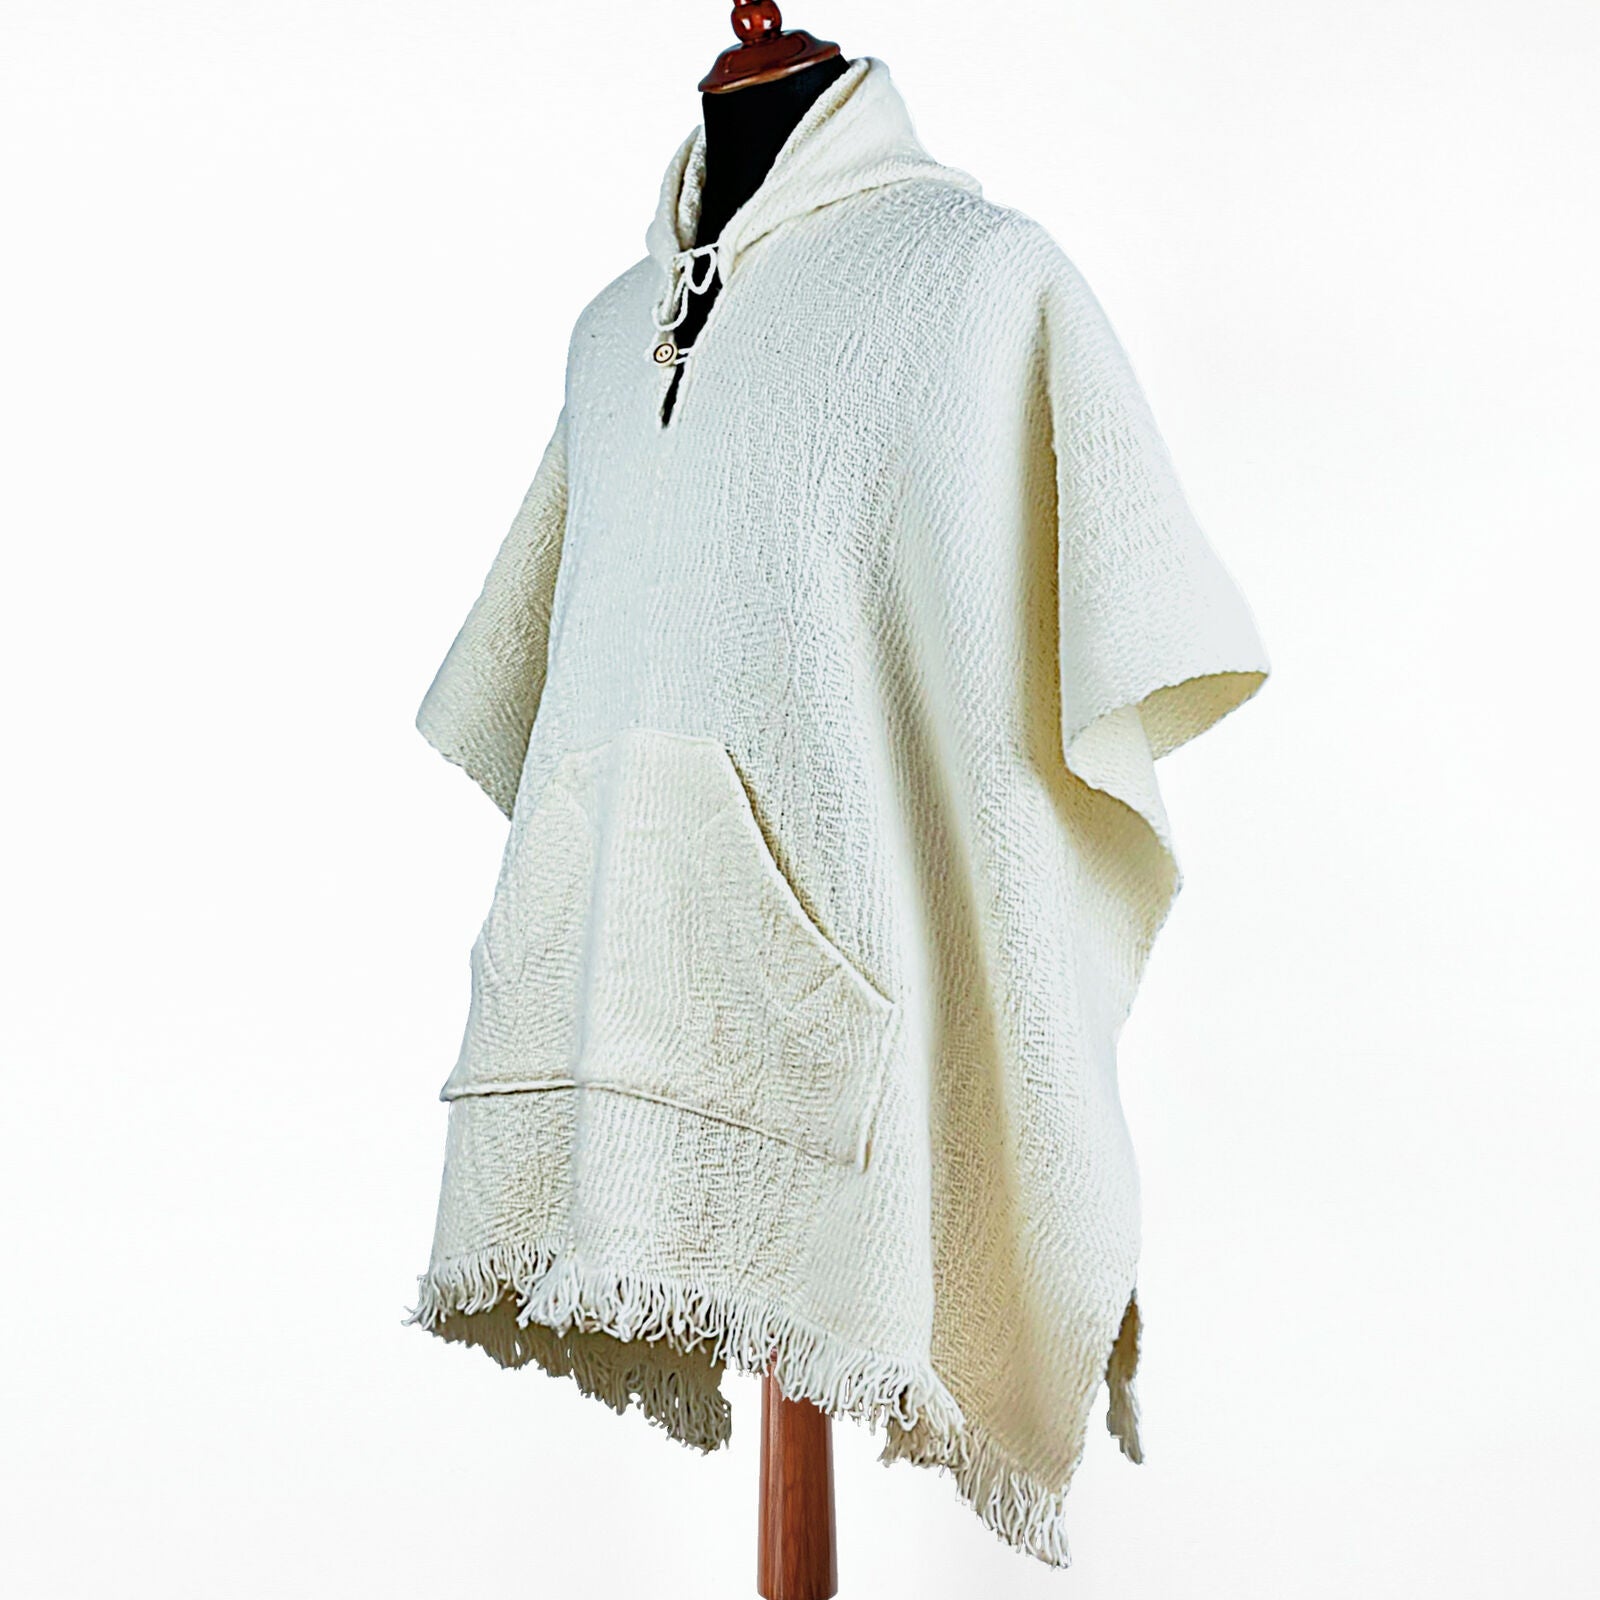 Llama Wool Unisex Handwoven Hooded Poncho - wavy striped white pattern - pocket